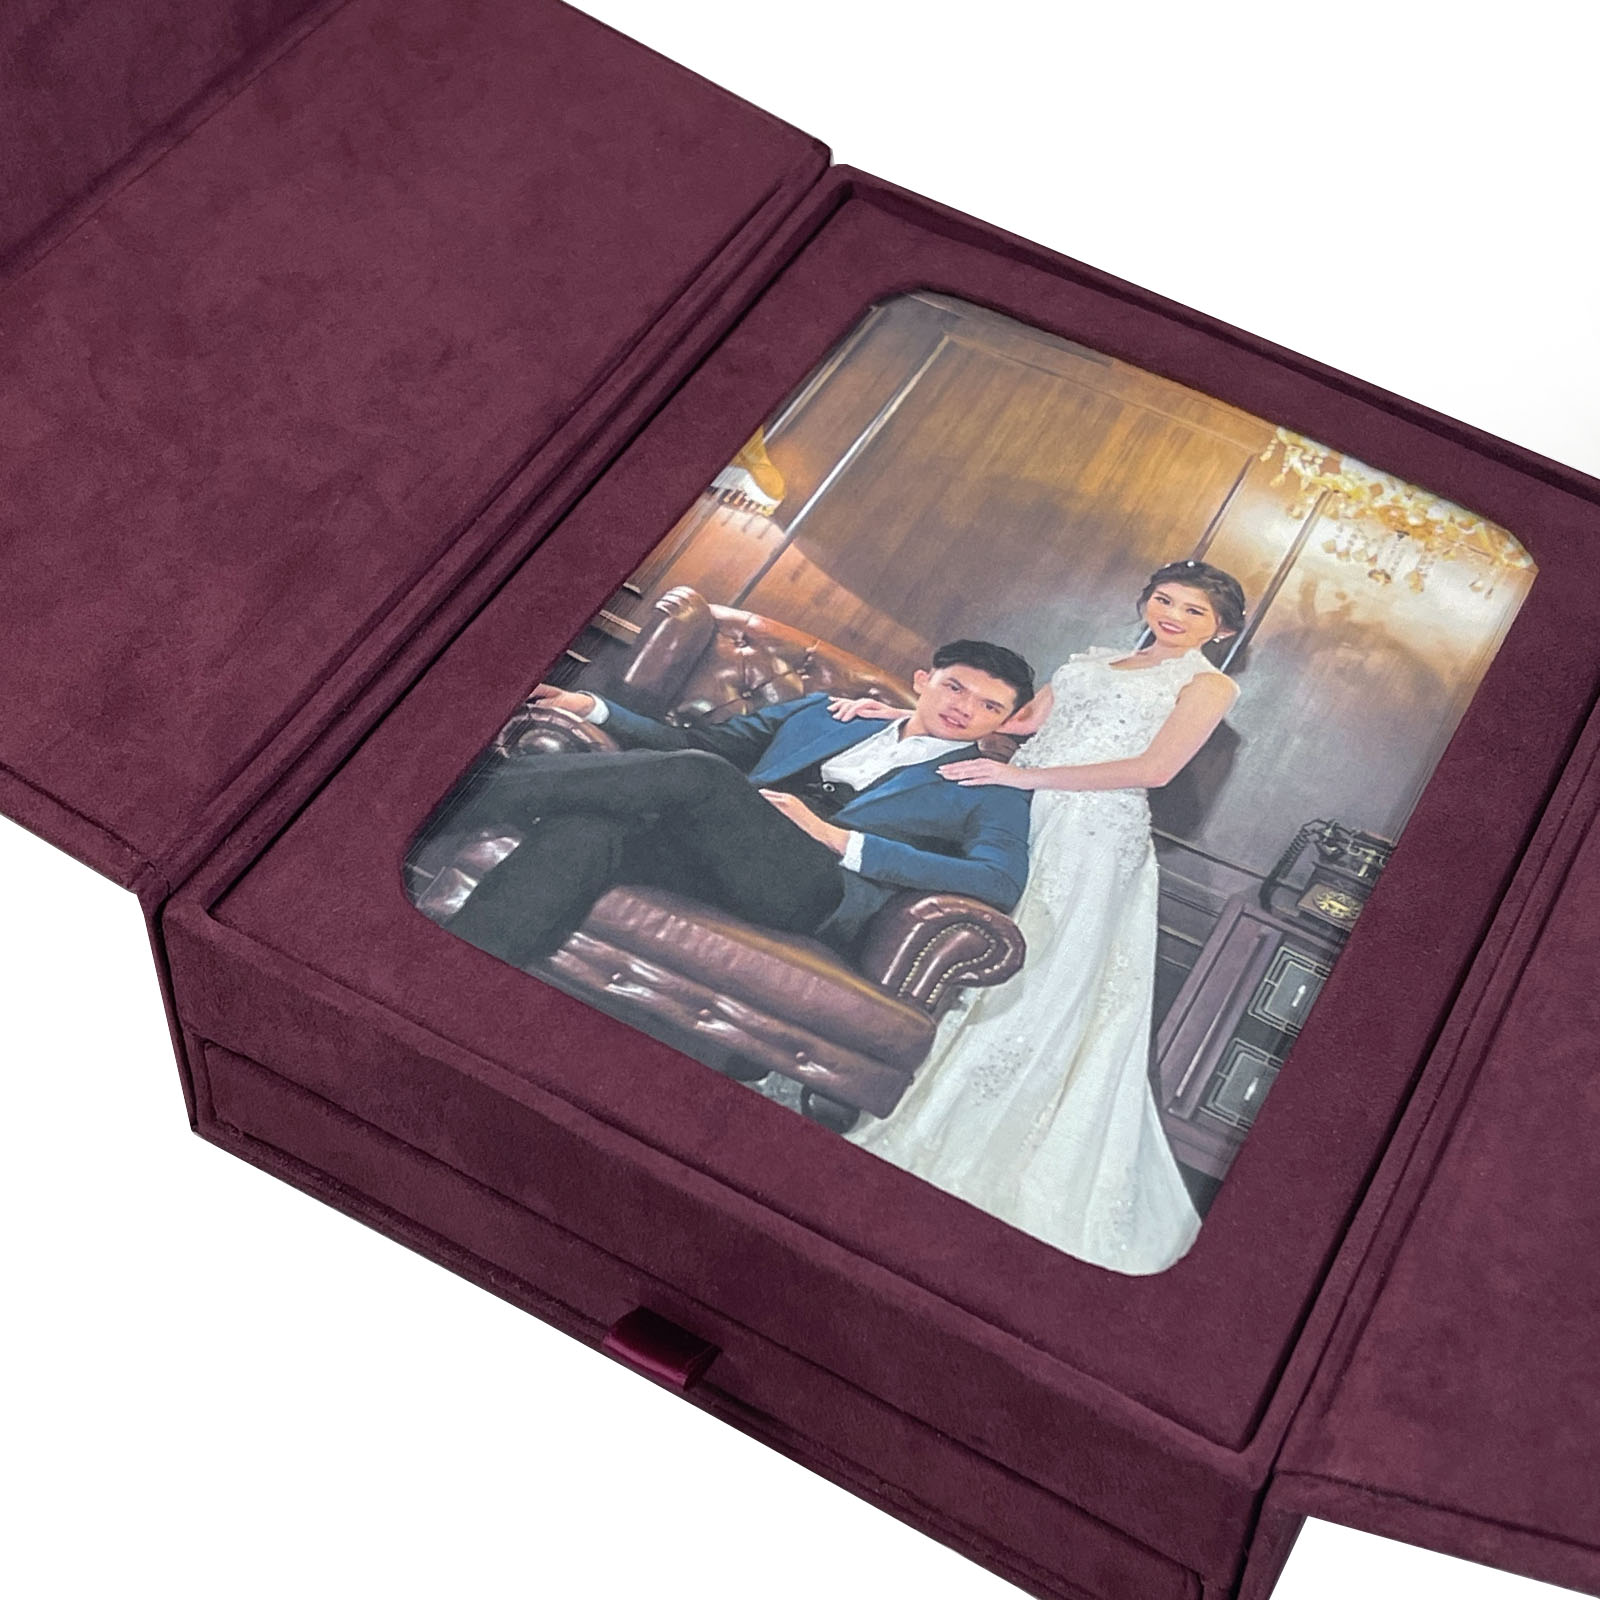 Suede wedding box